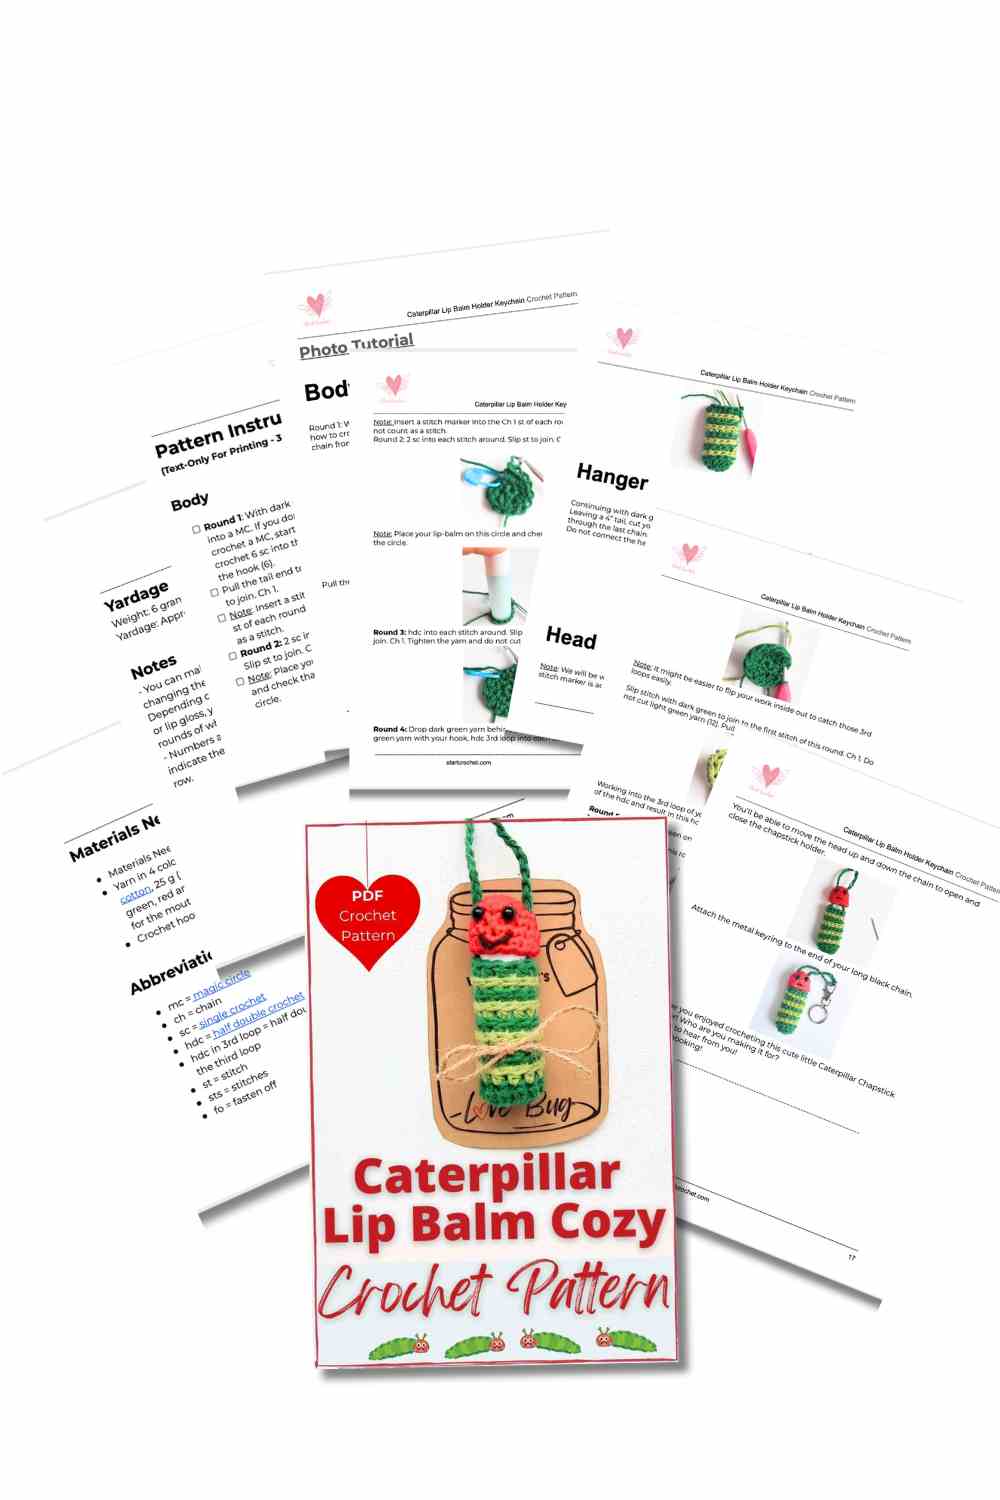 Caterpillar Lip Balm Cozy Crochet Pattern PDF Cover